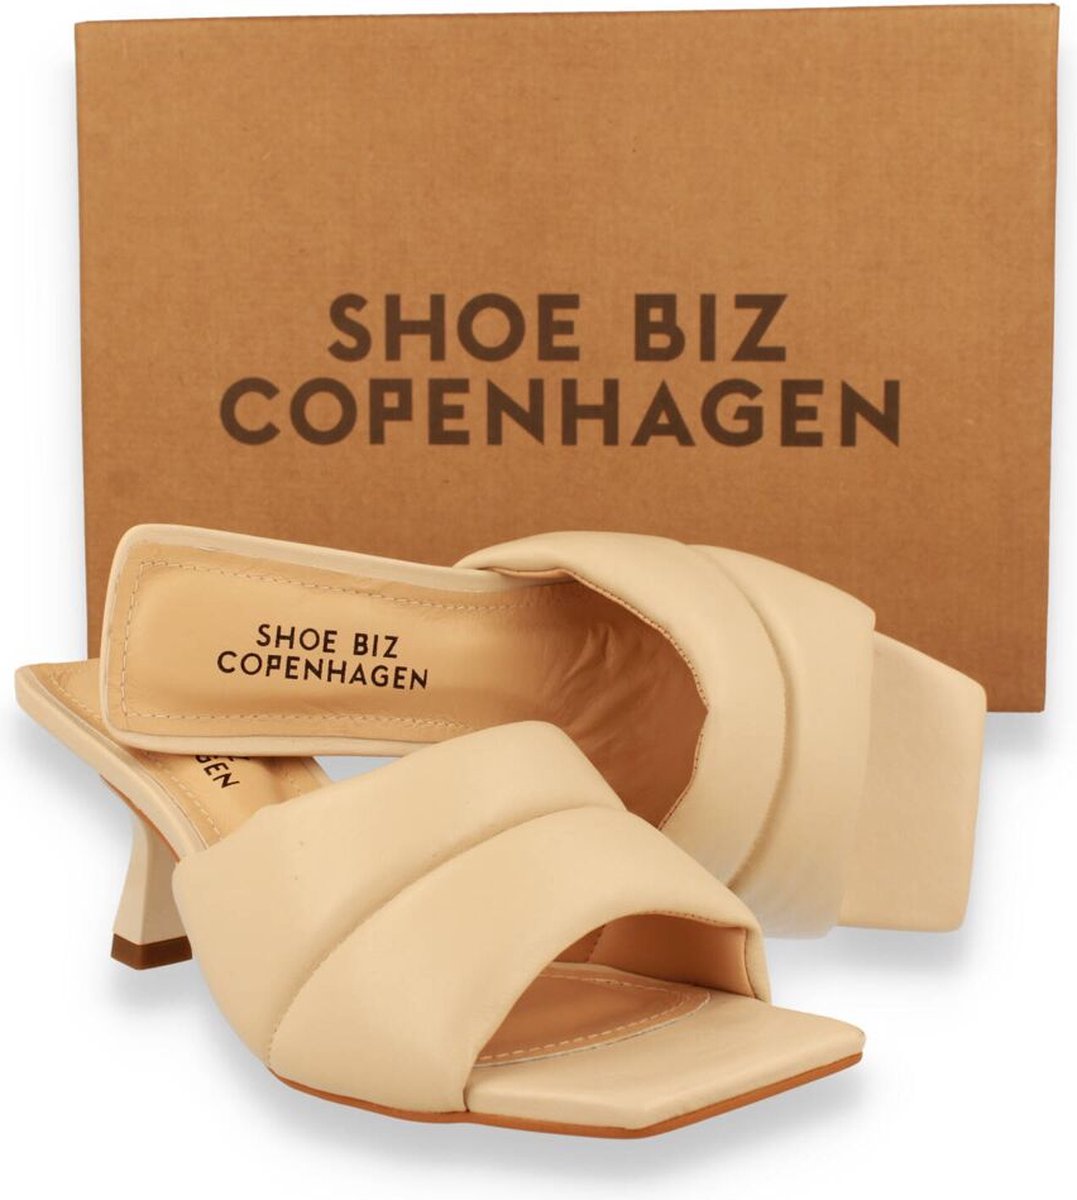 Copenhagen Shoebizz Shoe Biz Copenhagen dames Vix Smoothie BEIGE 38